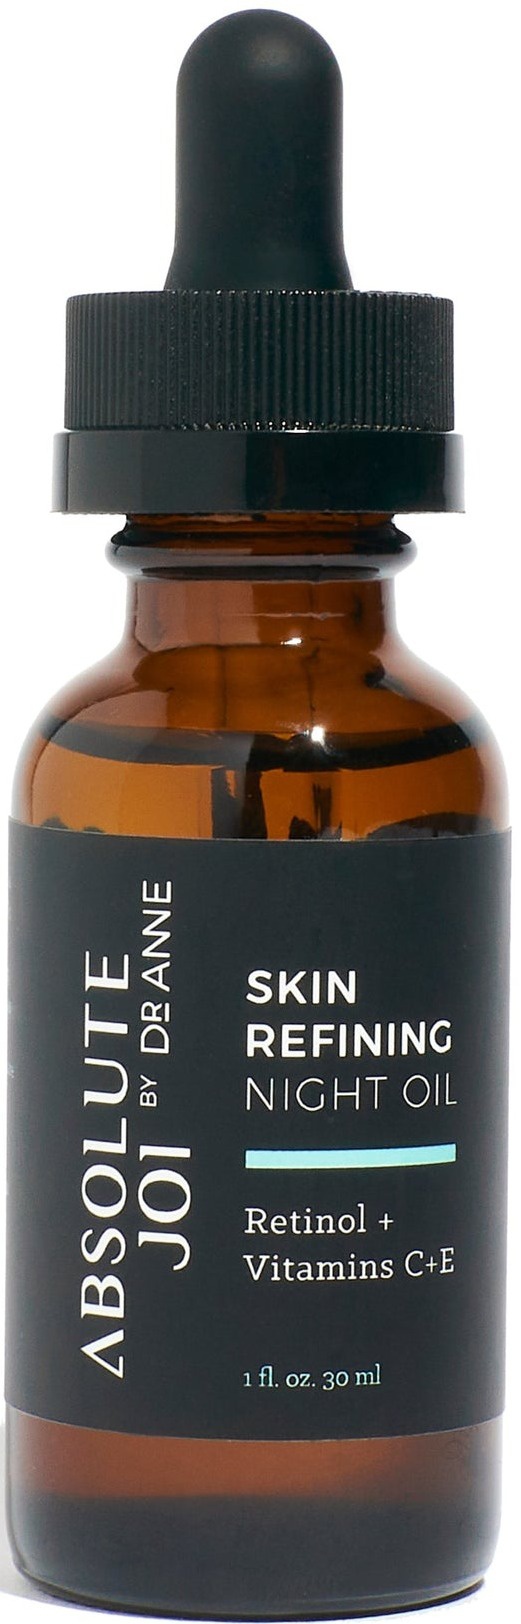 AbsoluteJoi Retinol Plus Vitamin C Skin Refining Night Oil